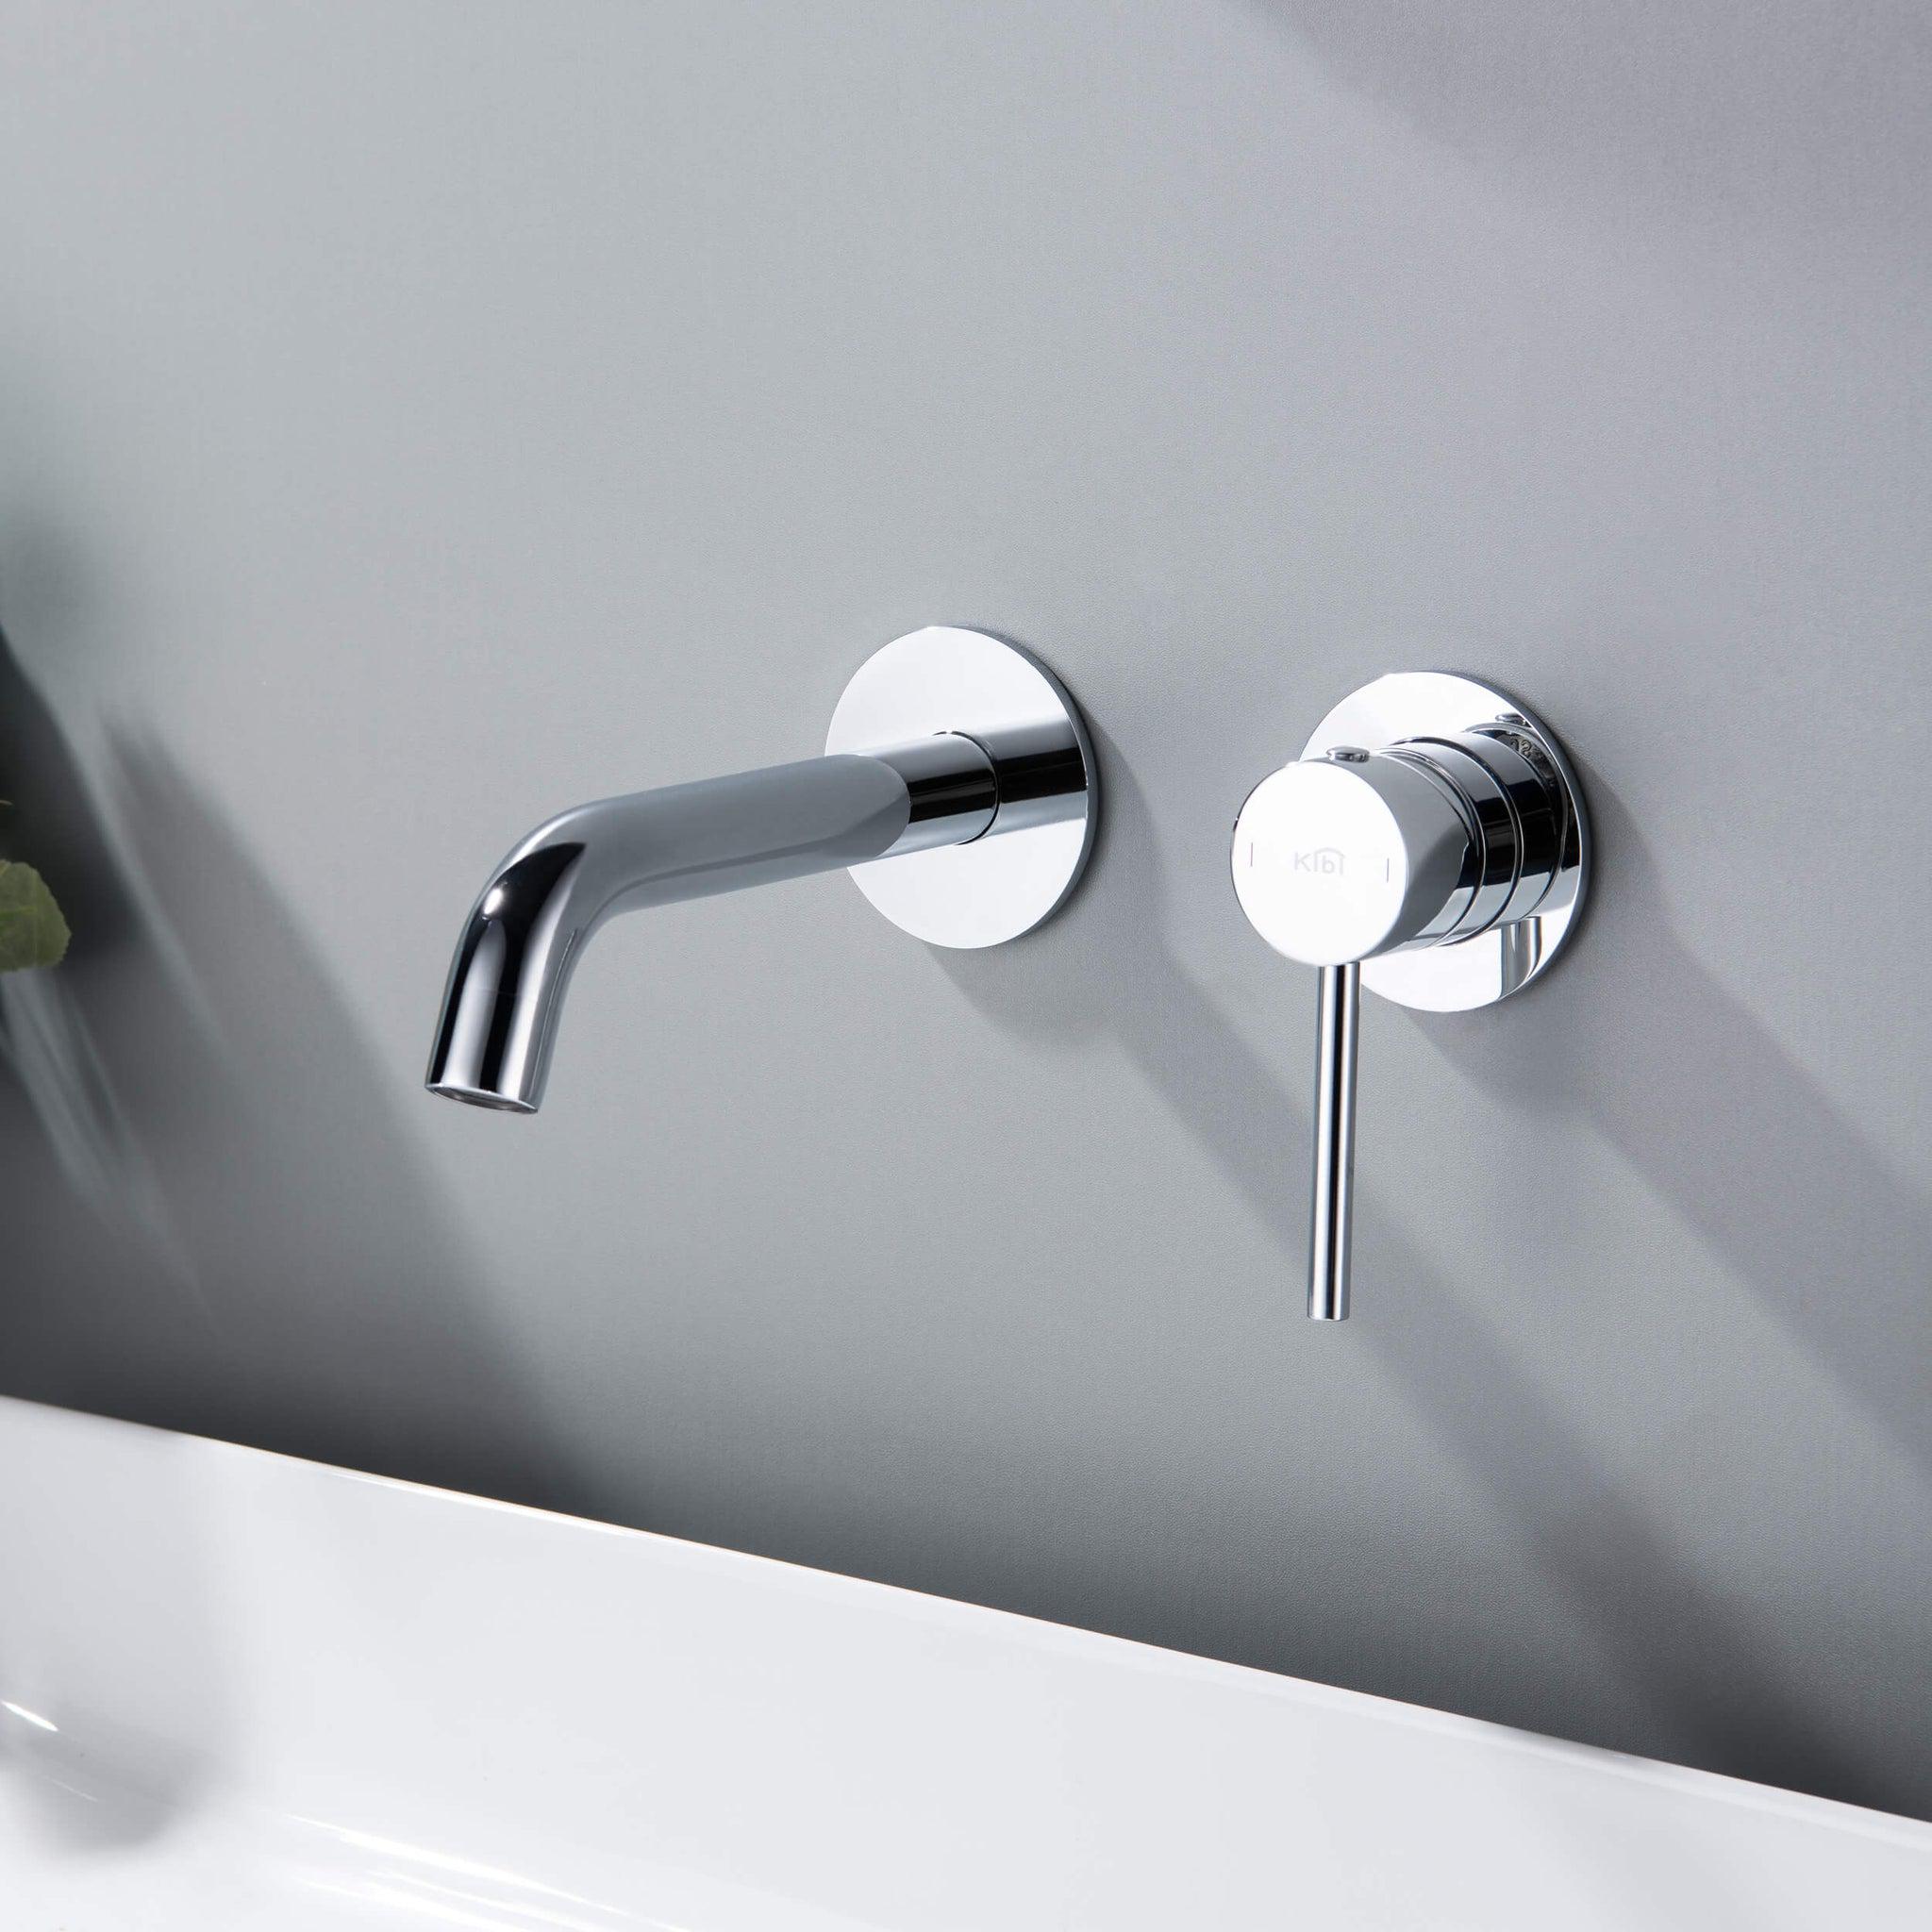 KIBI, KIBI Circular Wall Mounted Single Handle Chrome Solid Brass Bathroom Sink Faucet